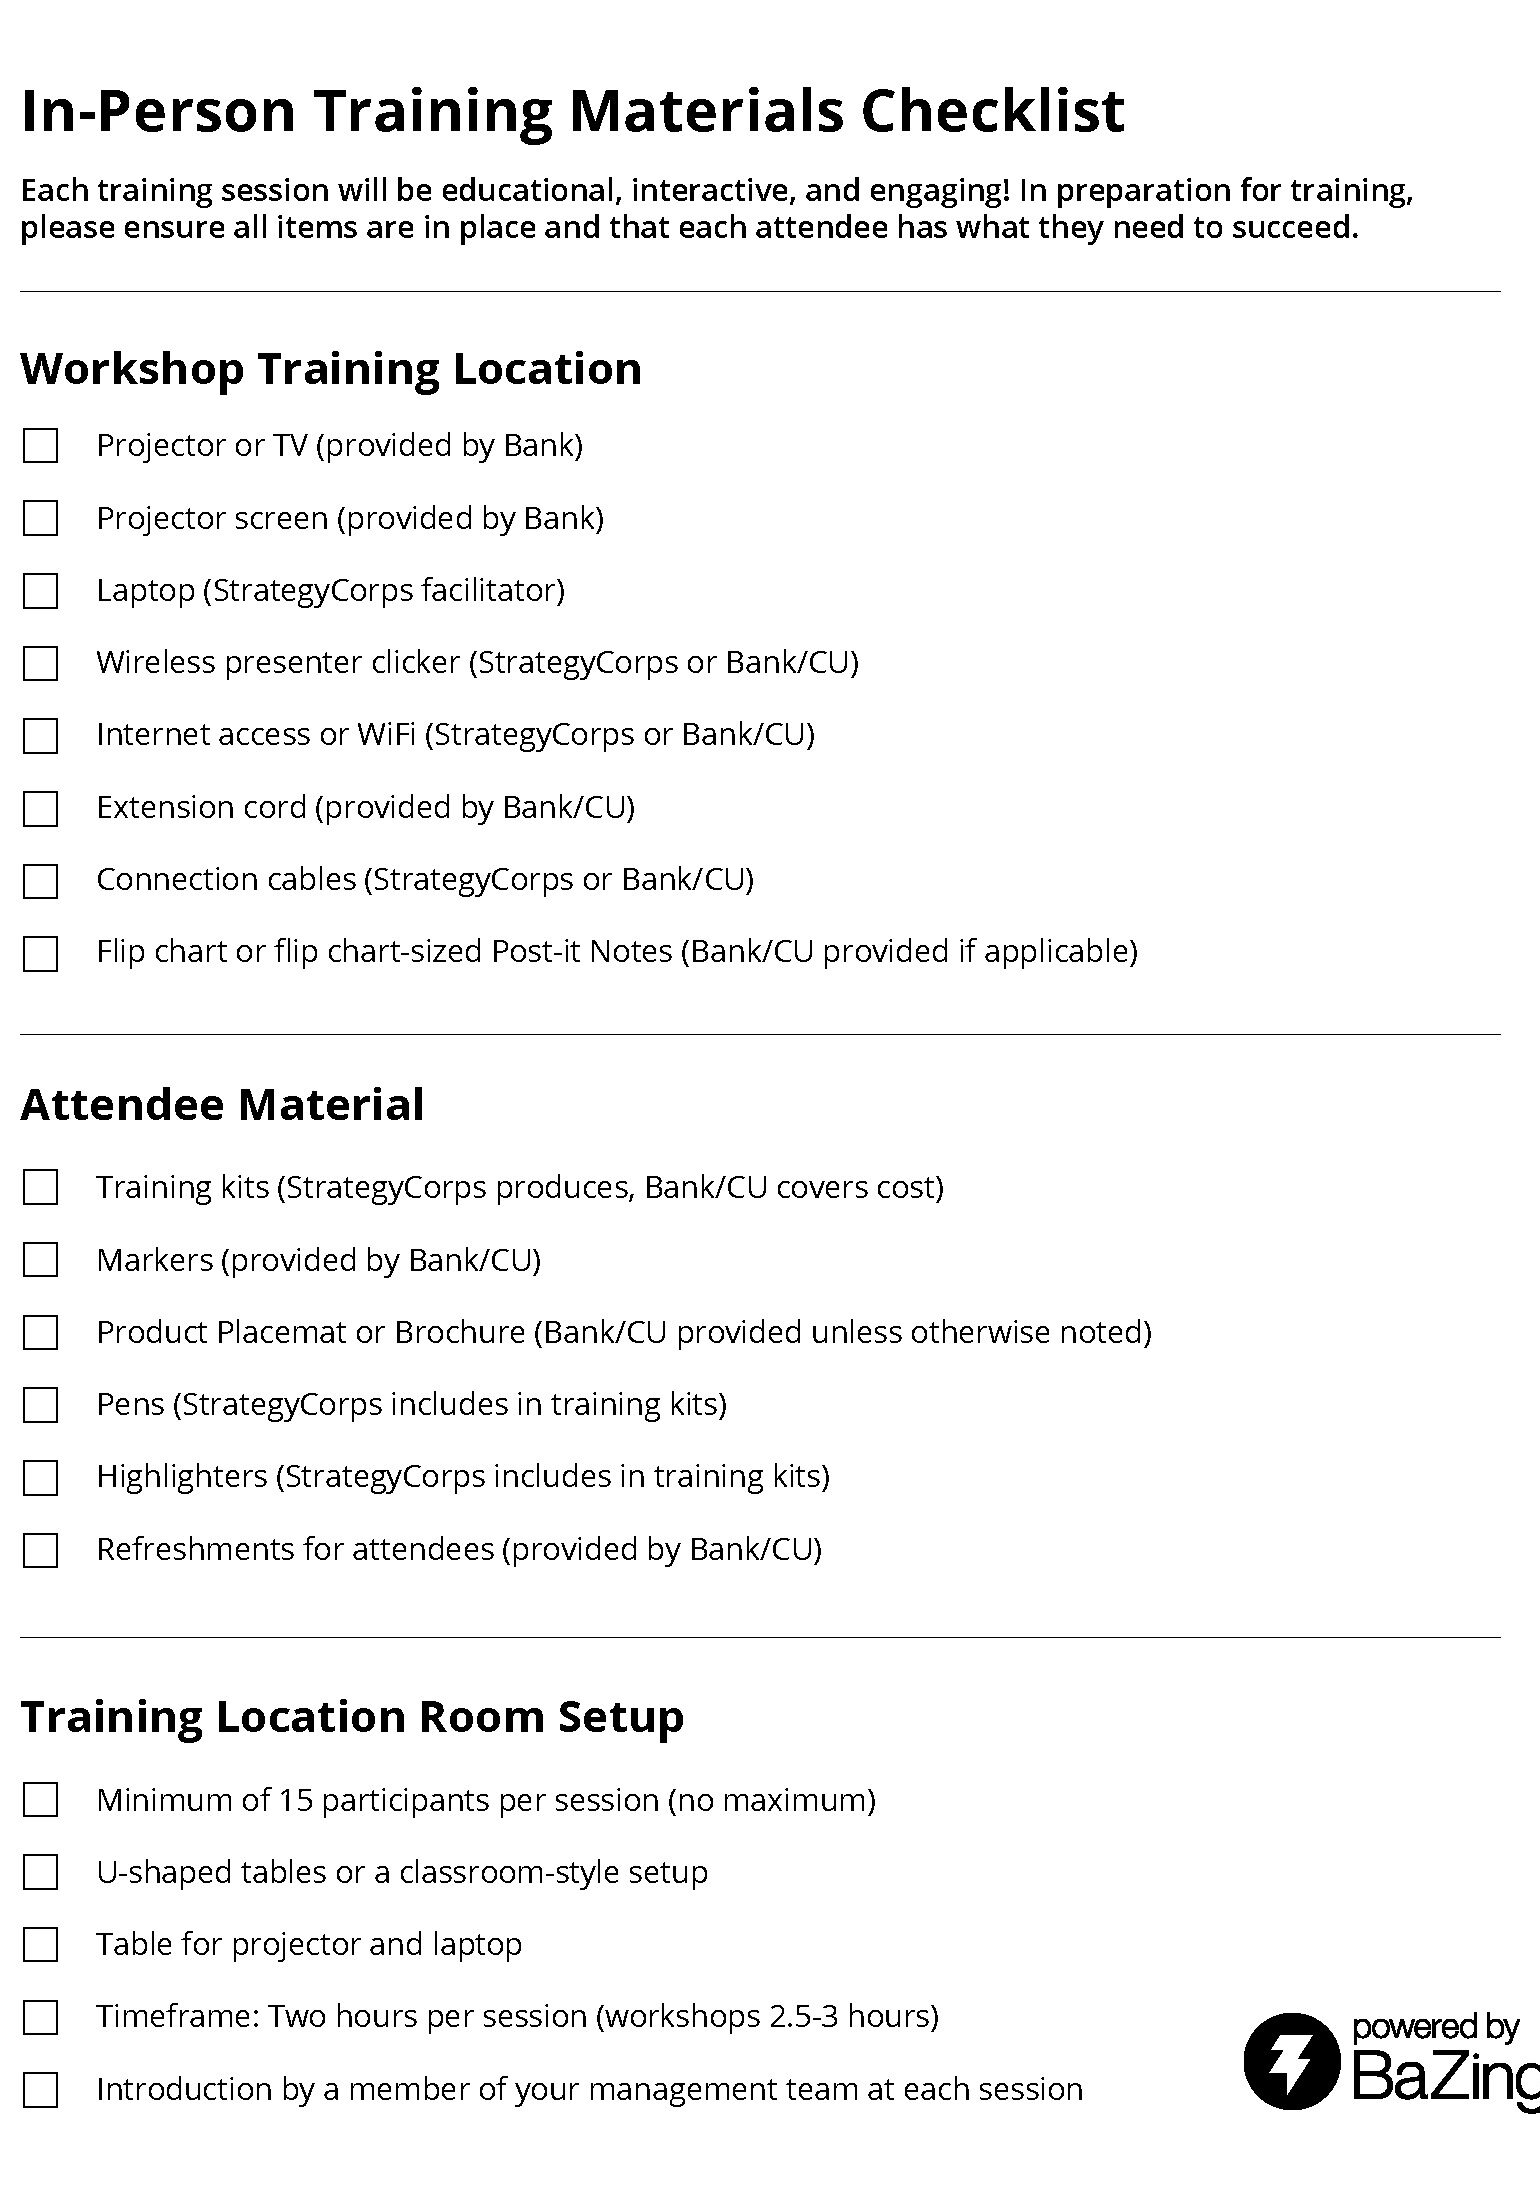 Training Checklist
(Print Version)